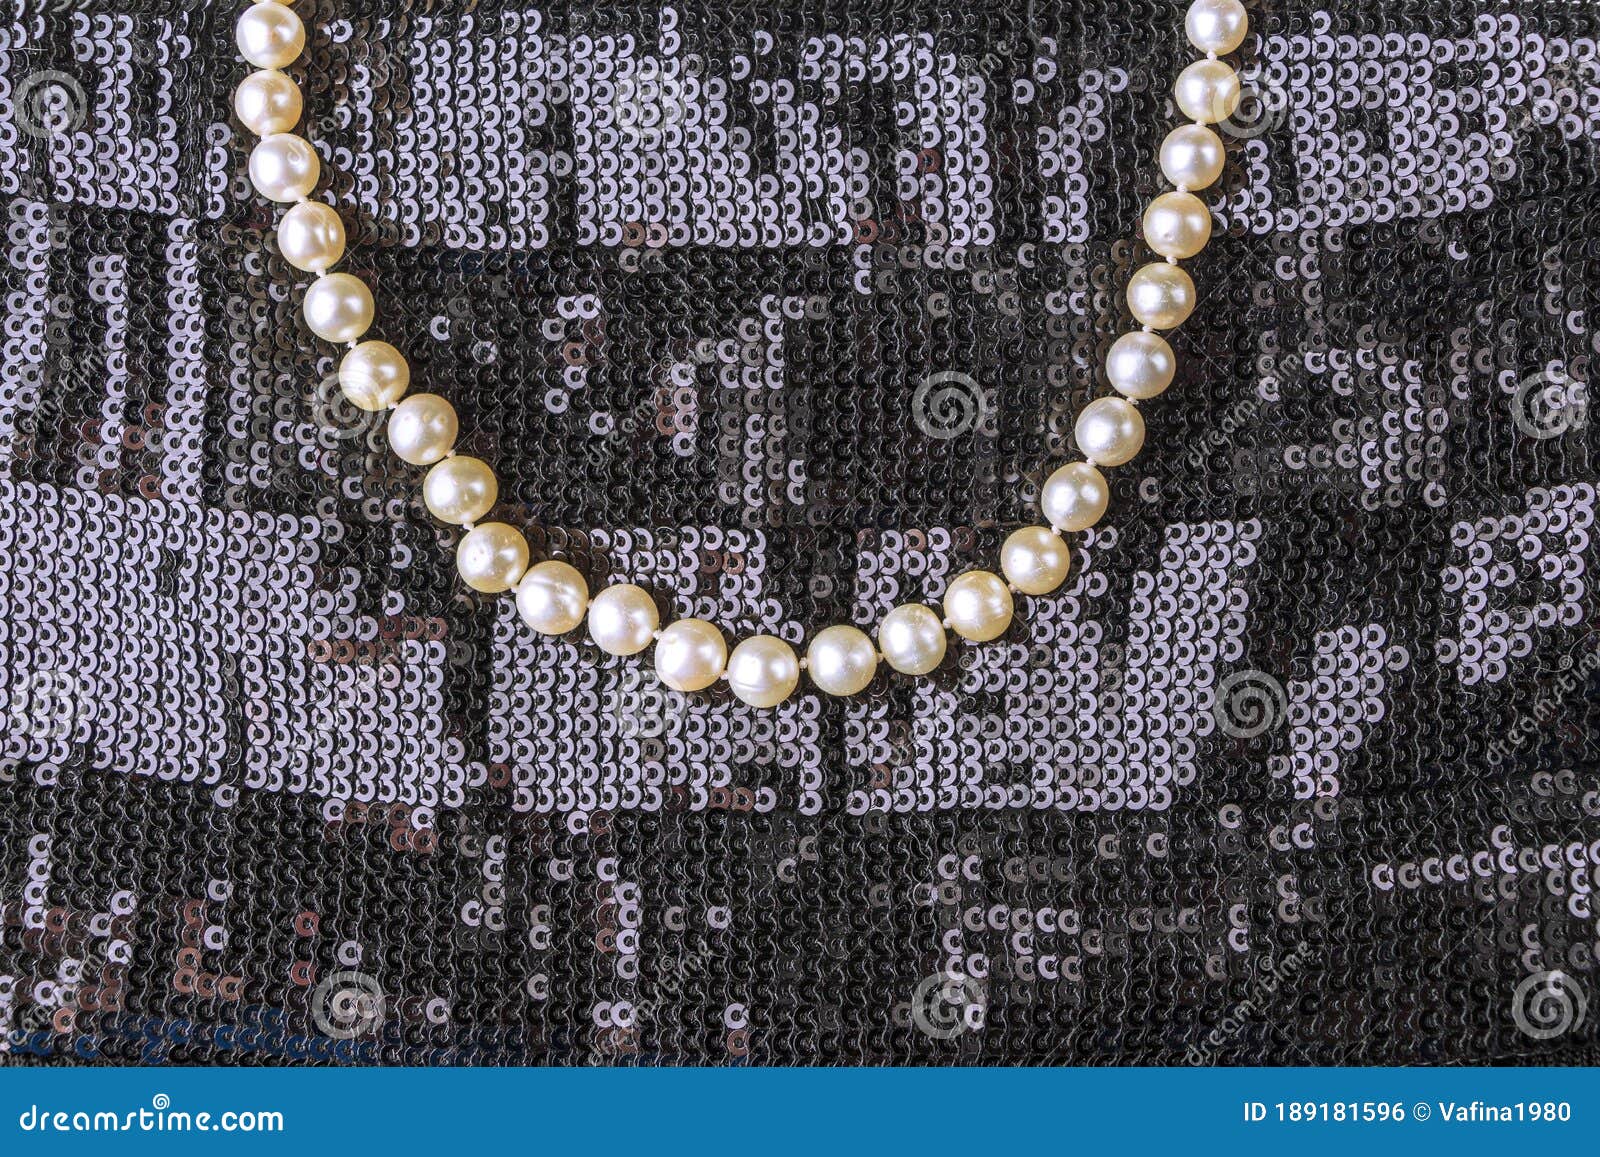 black dress with pearl jewelry